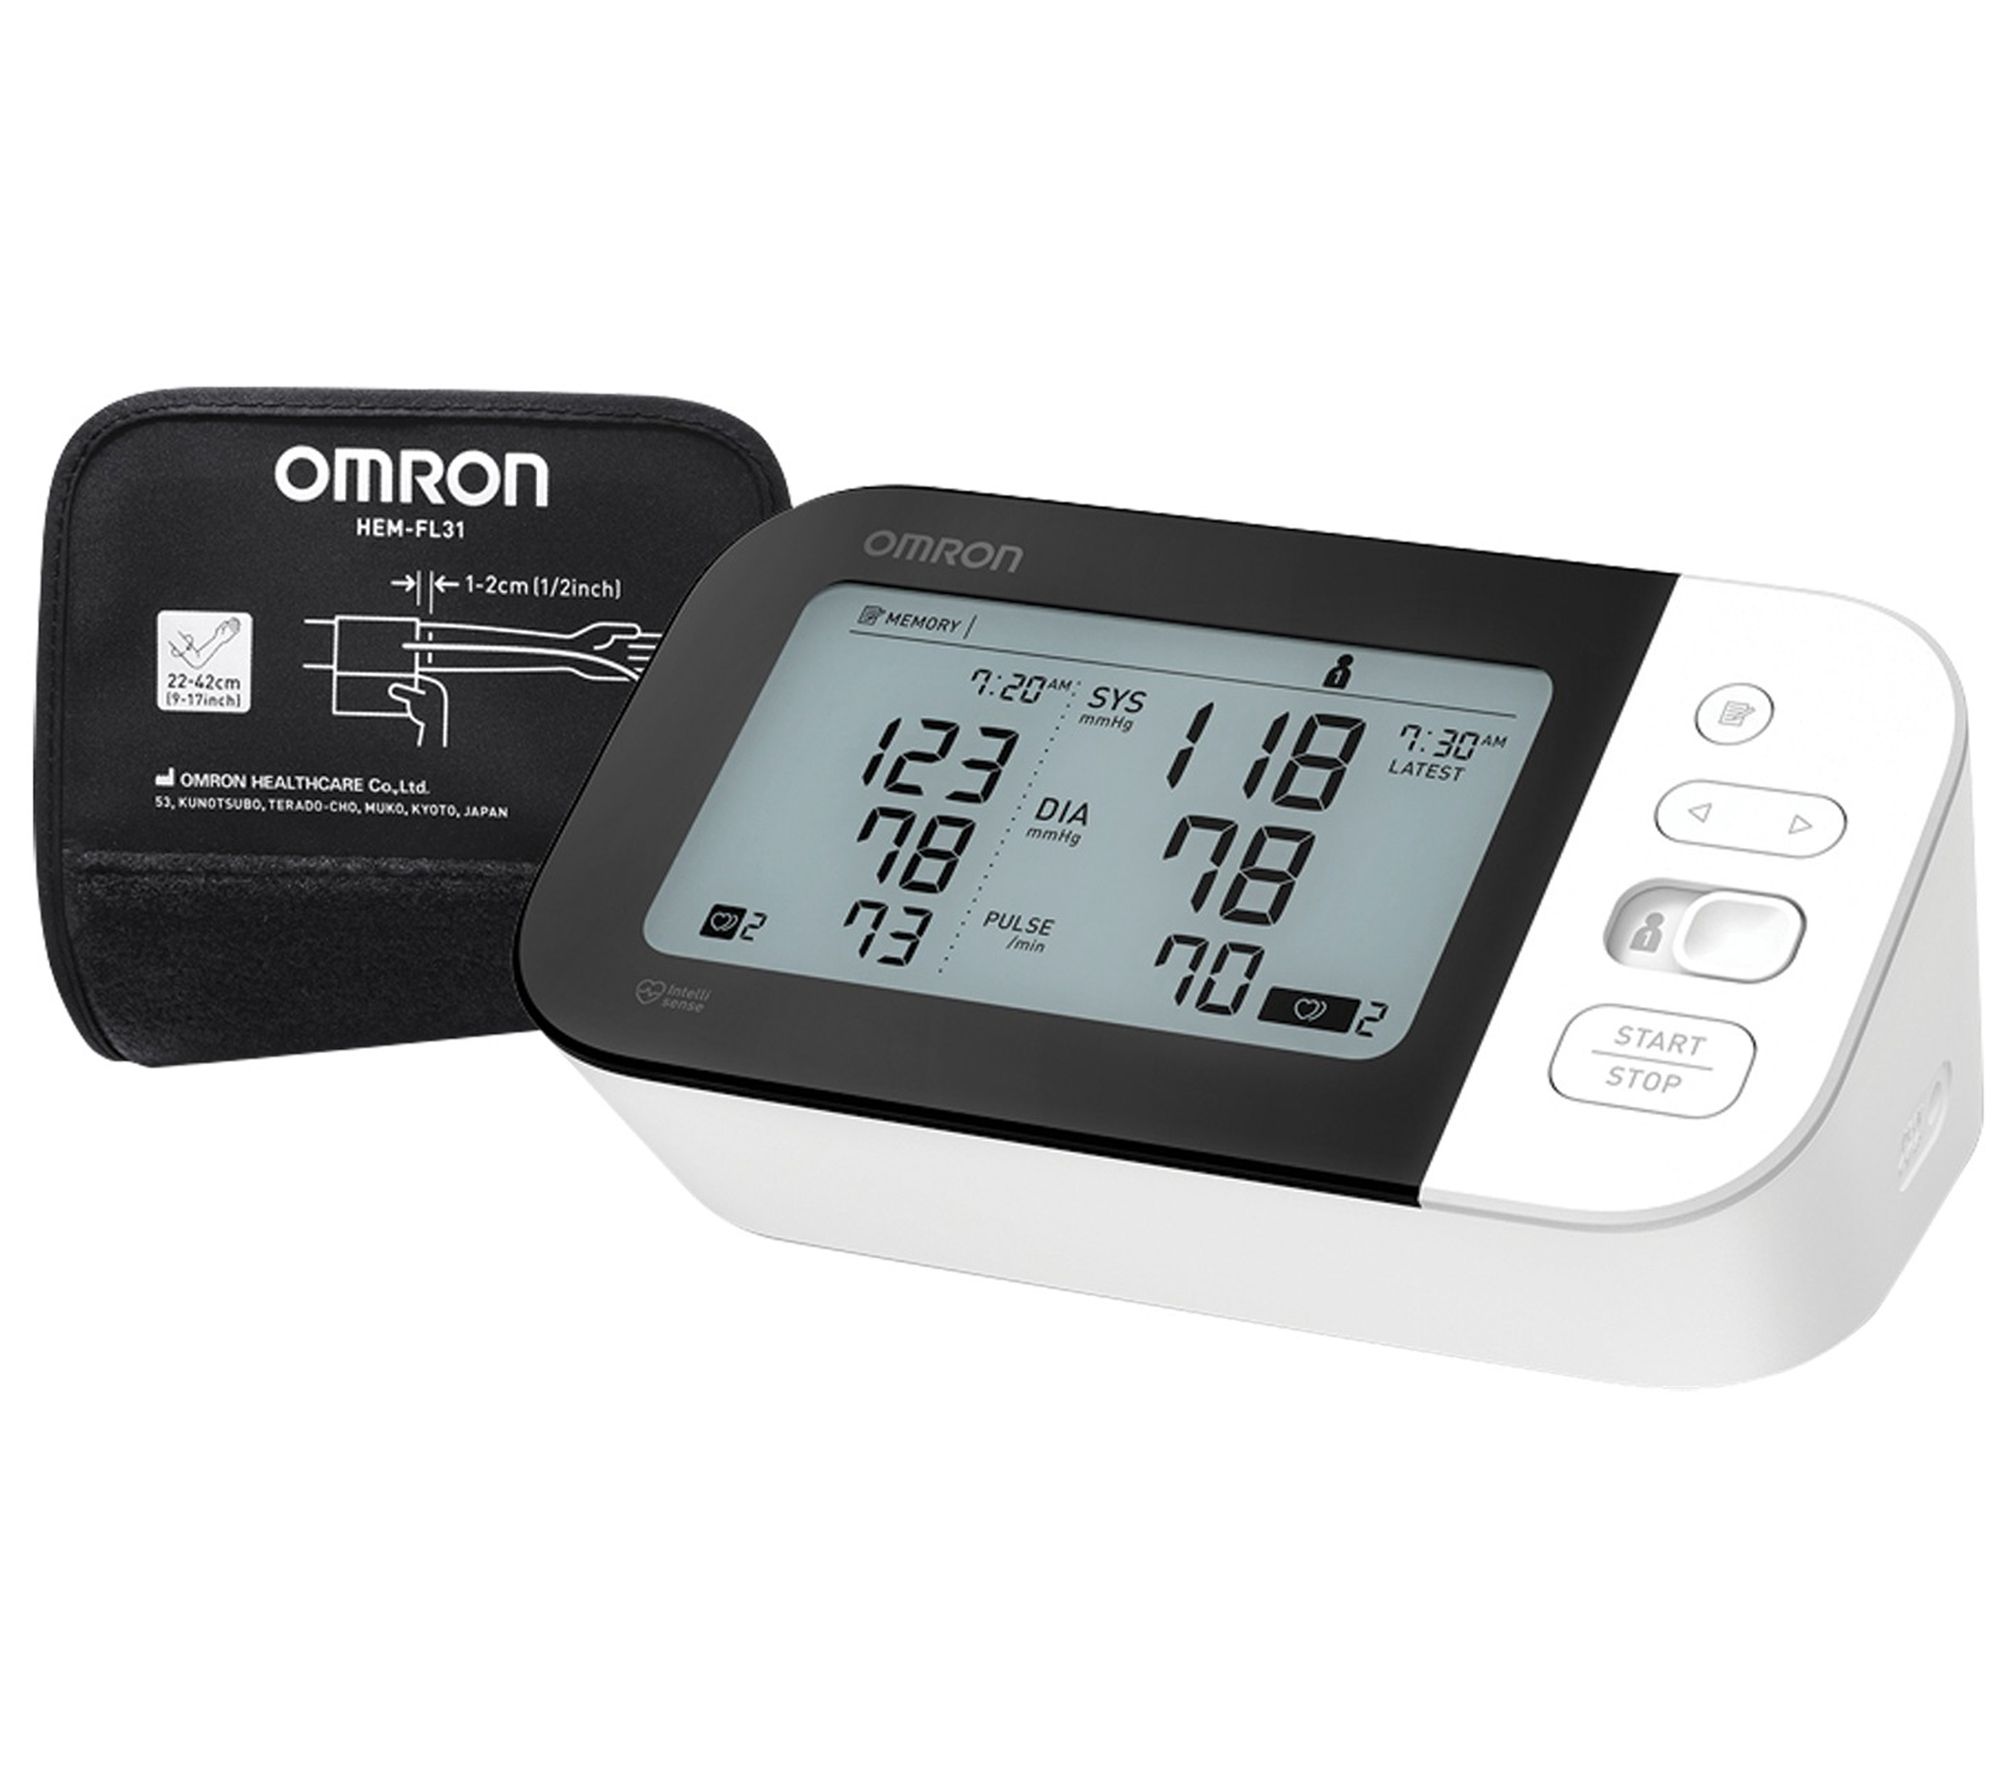 Omron 5 Series Blood Pressure Monitor Kit with IntelliSense